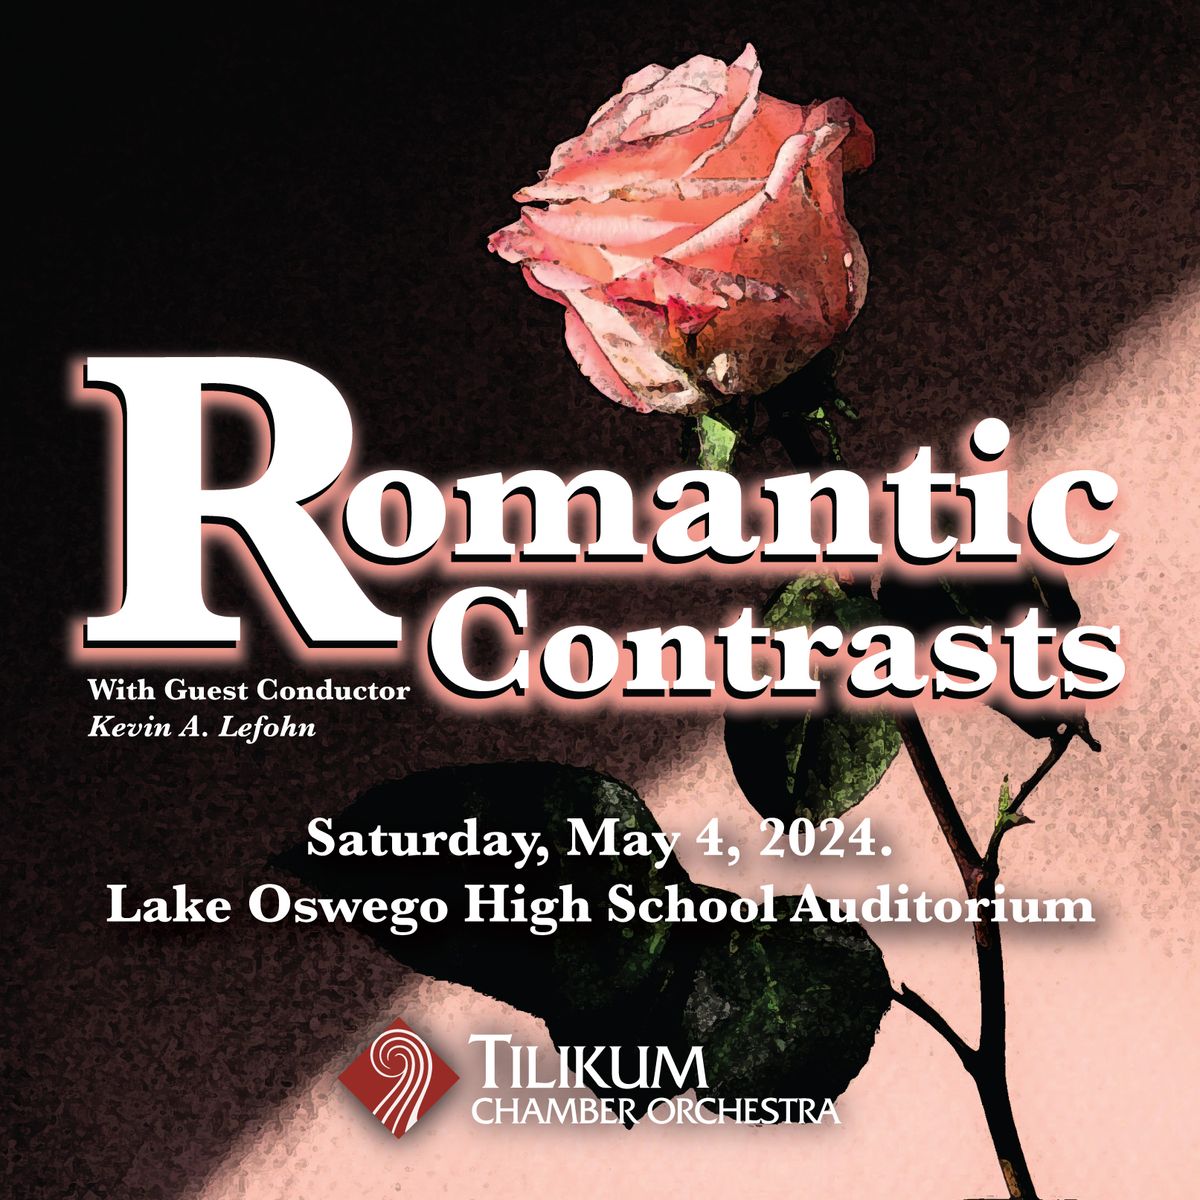 Tilikum Chamber Orchestra - "Romantic Contrasts"